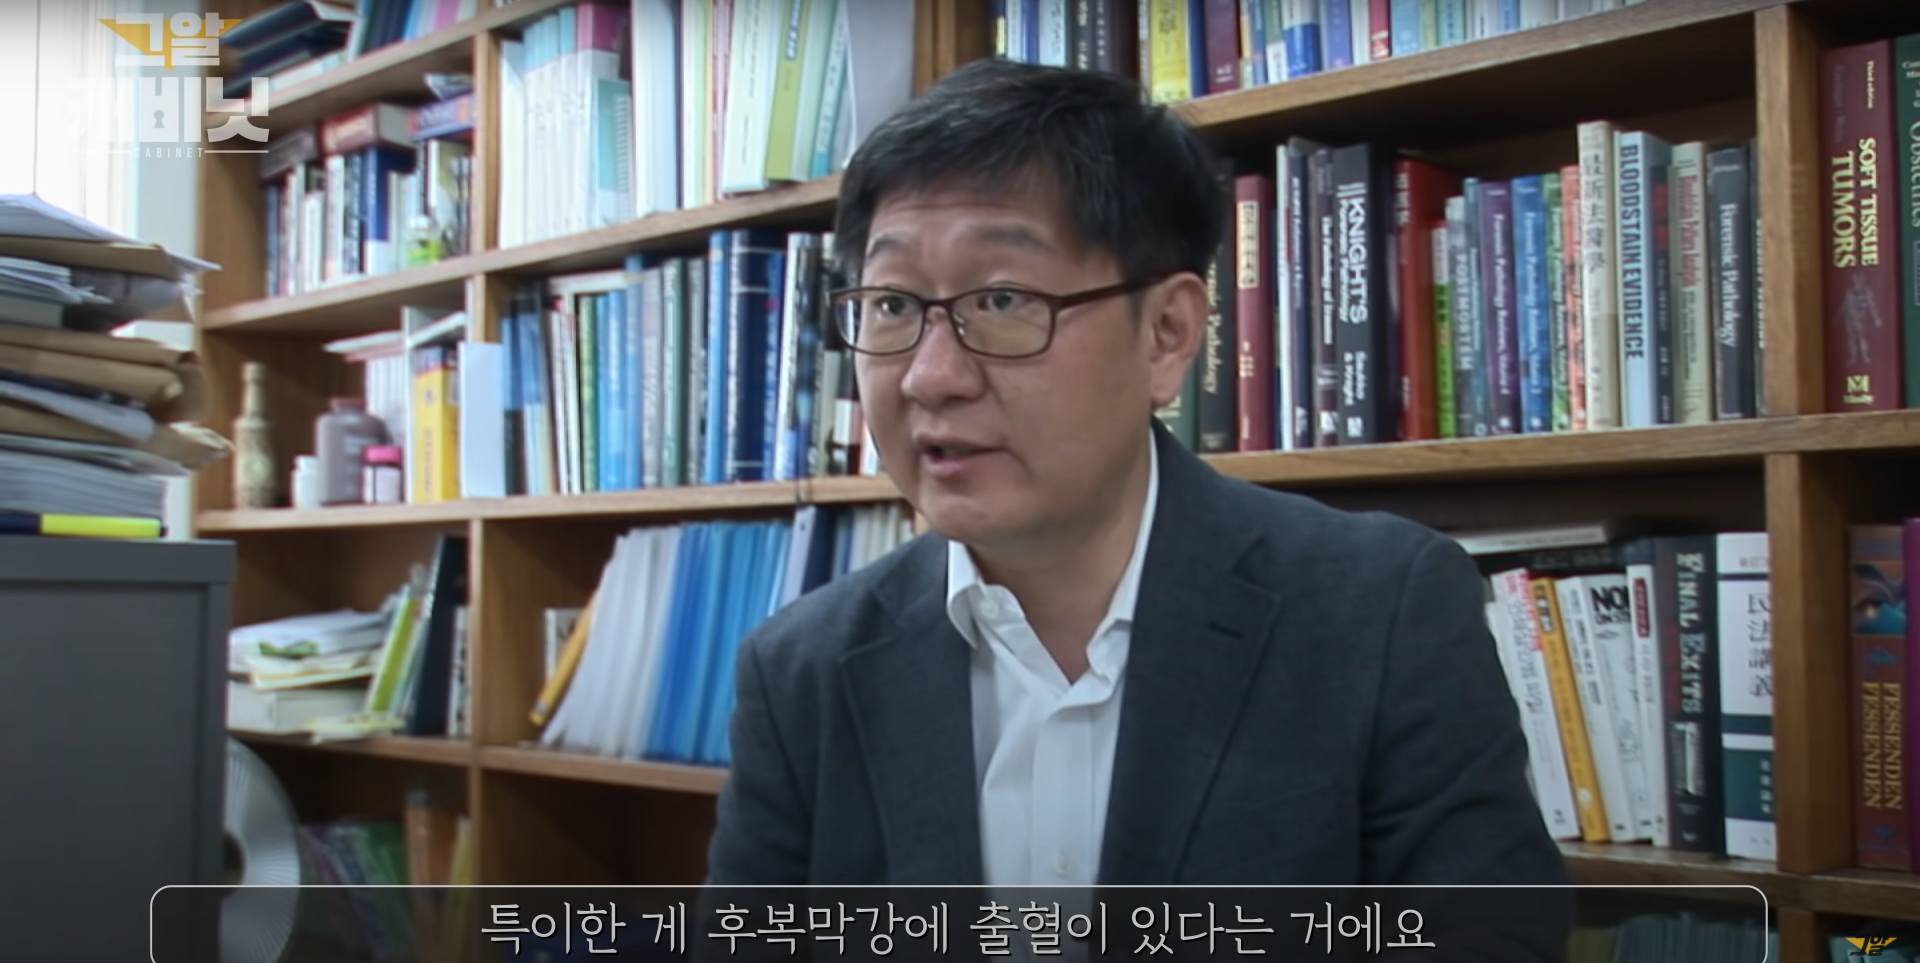 unsolved crimes in korea - yoo seung-ho